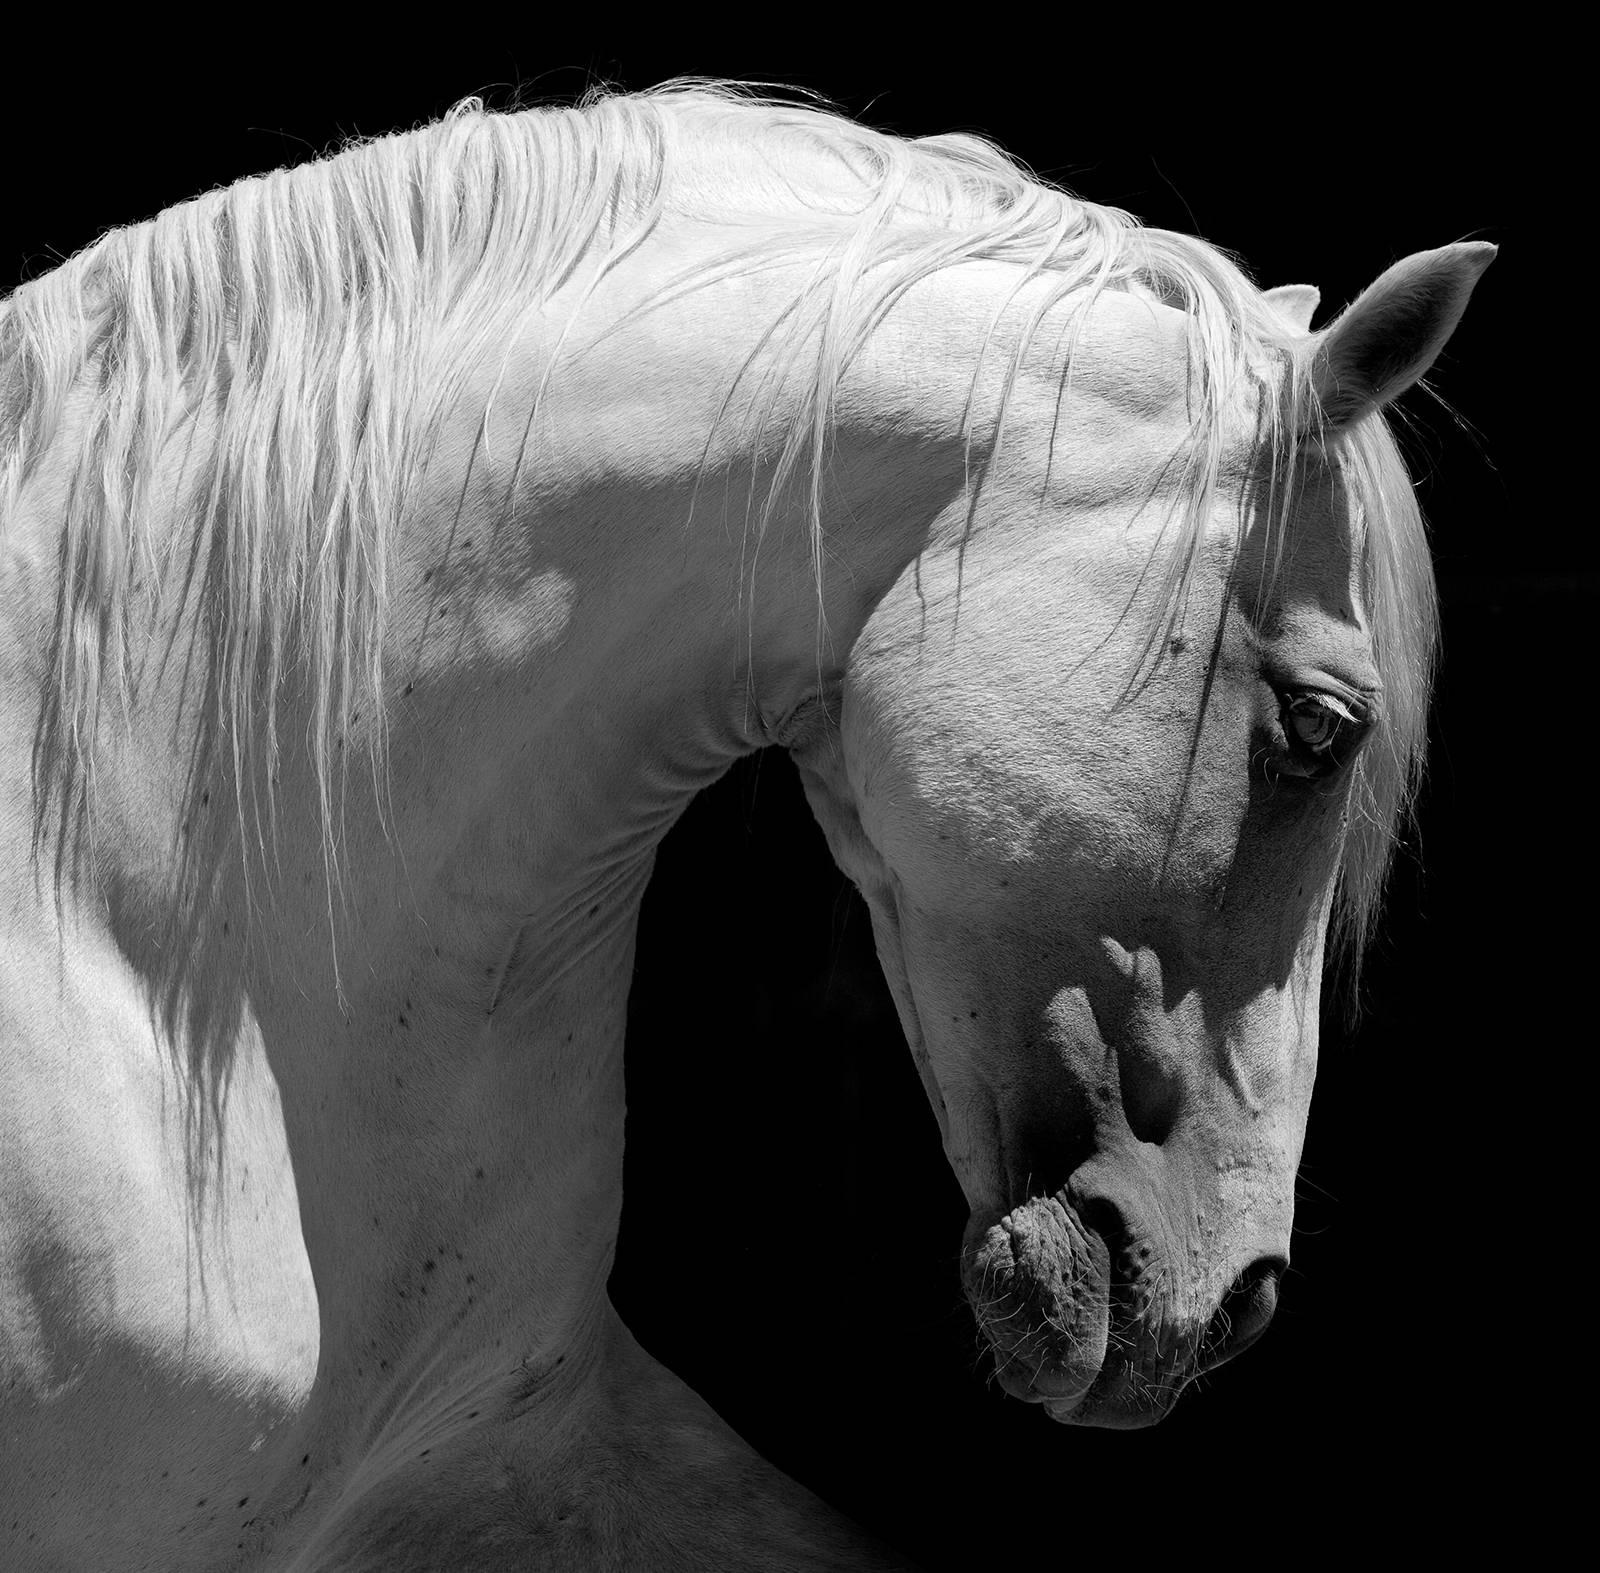 Baldur Tryggvason Still-Life Photograph - 'White Andalsuian Horse' C print